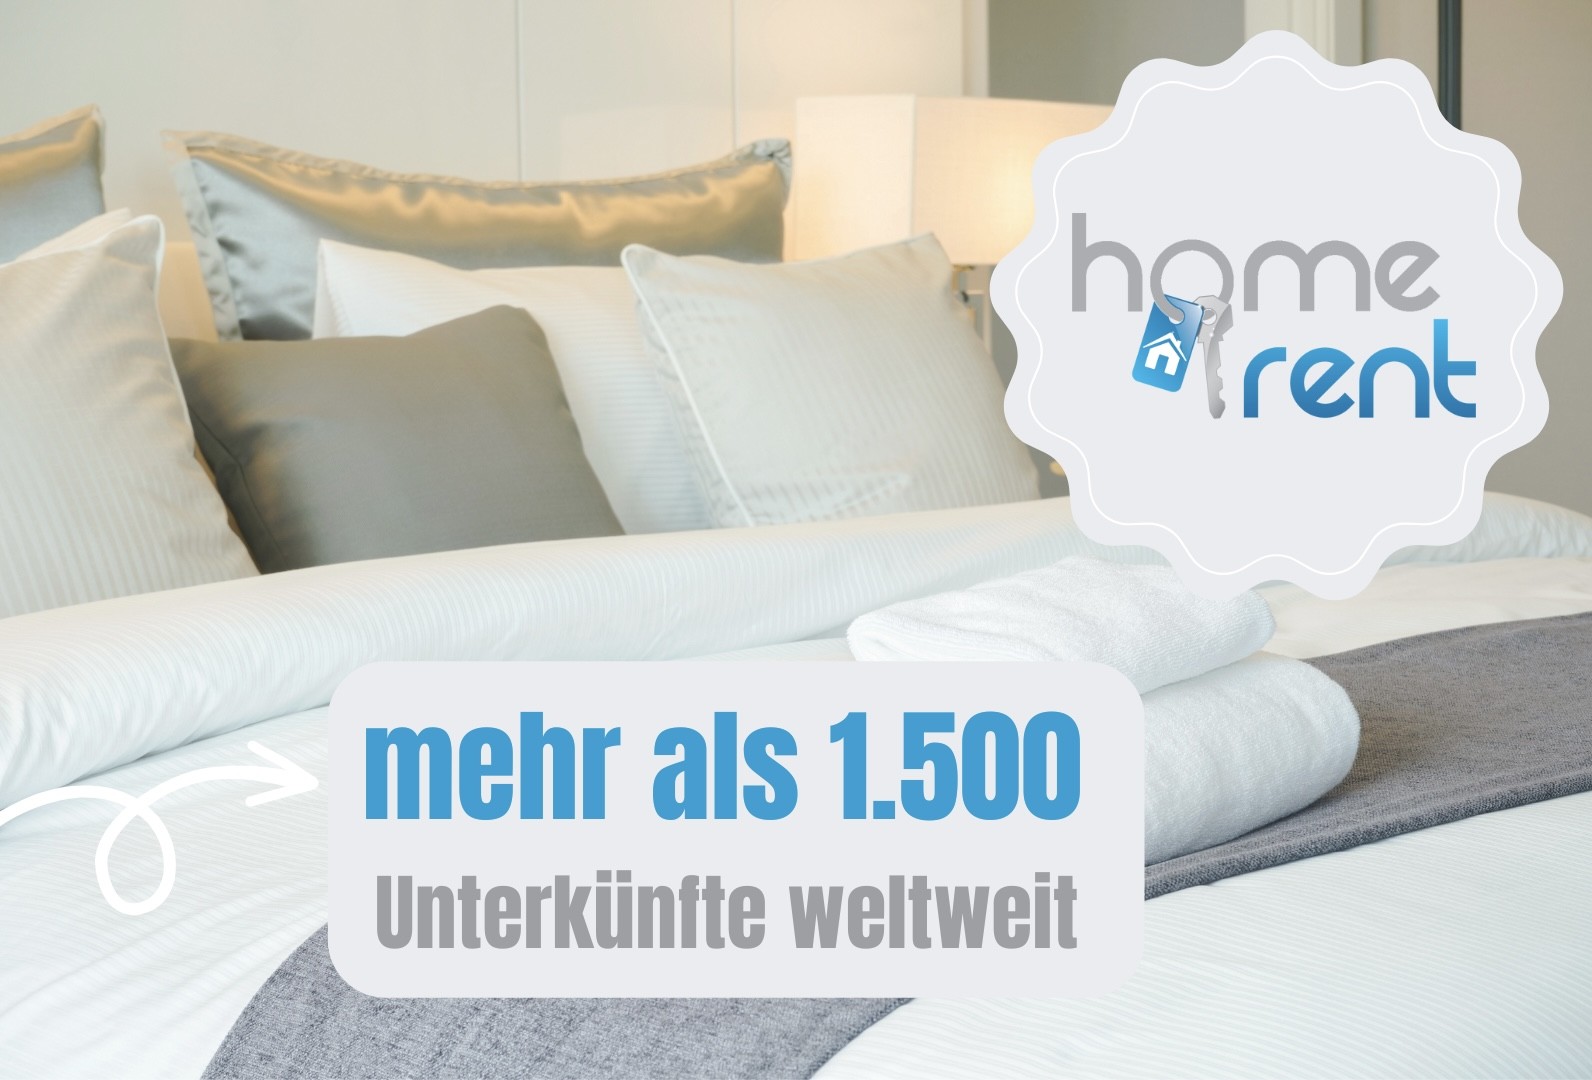 Ferienwohnung Bremerhaven Homerent Immobilien GmbH 27576 169157537464d3644e2f81a